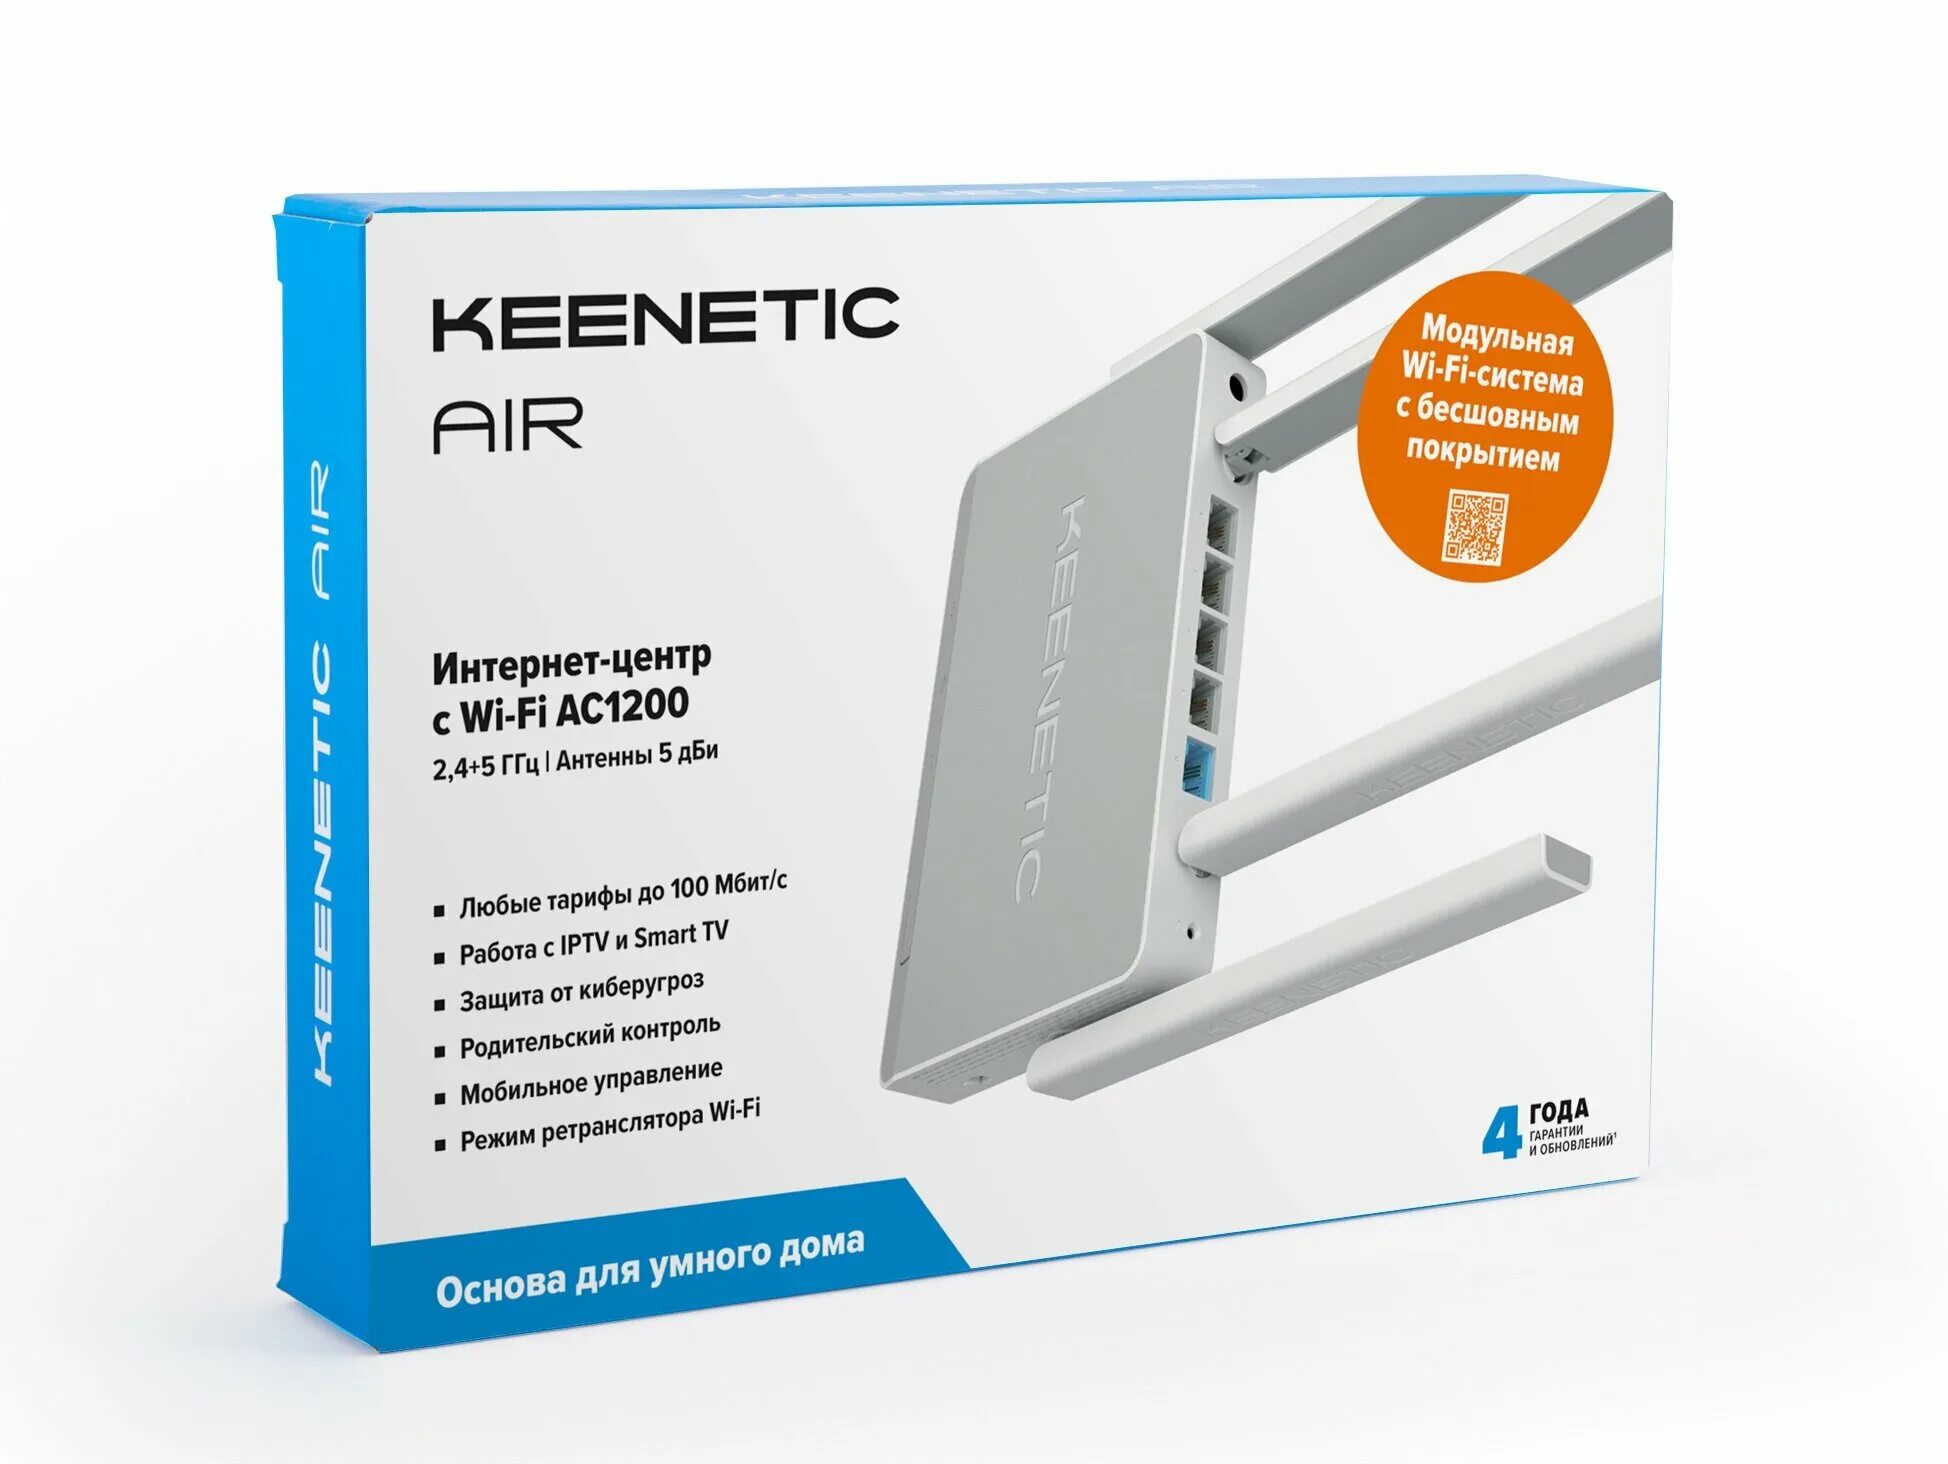 Кинетик спидстер купить. Keenetic Extra ac1200. Wi-Fi роутер Keenetic Air (KN-1613). Wi-Fi Mesh система Keenetic Air Kit (KN-Kit-001), белый. Keenetic Air ac1200.